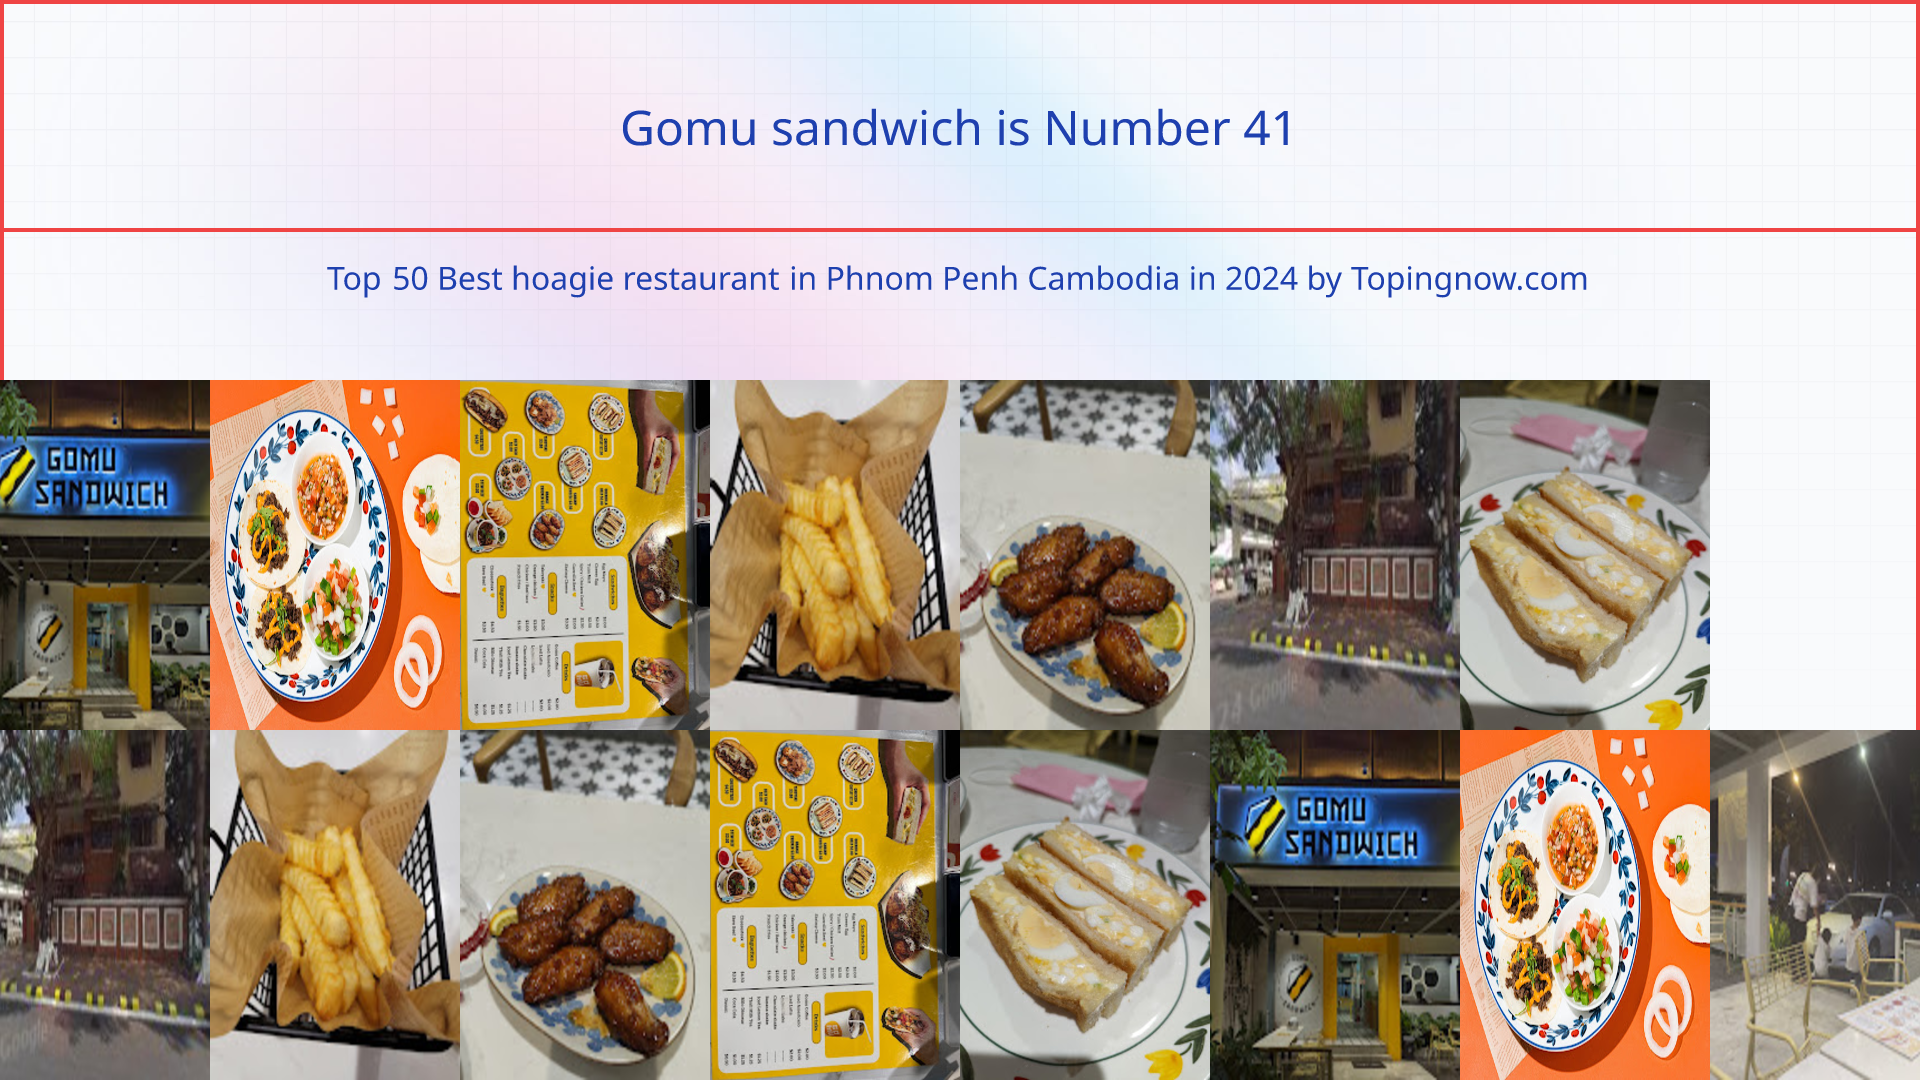 Gomu sandwich: Top 50 Best hoagie restaurant in Phnom Penh Cambodia in 2024